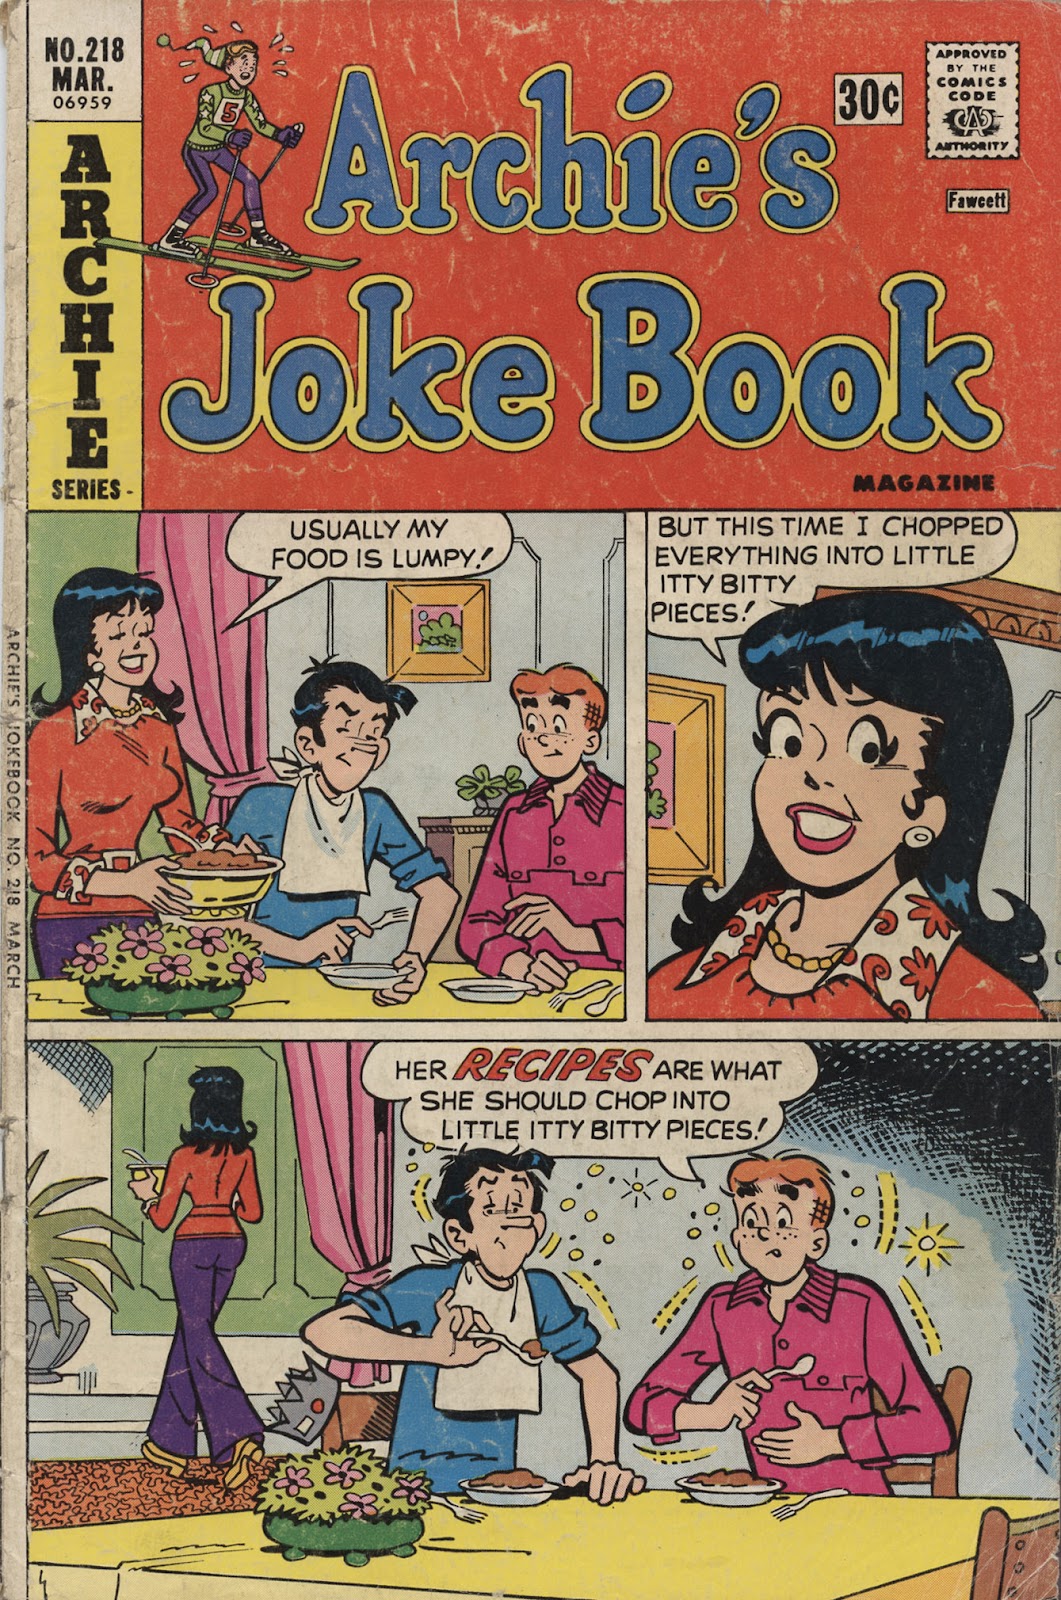 Archie's Joke Book Magazine issue 218 - Page 1